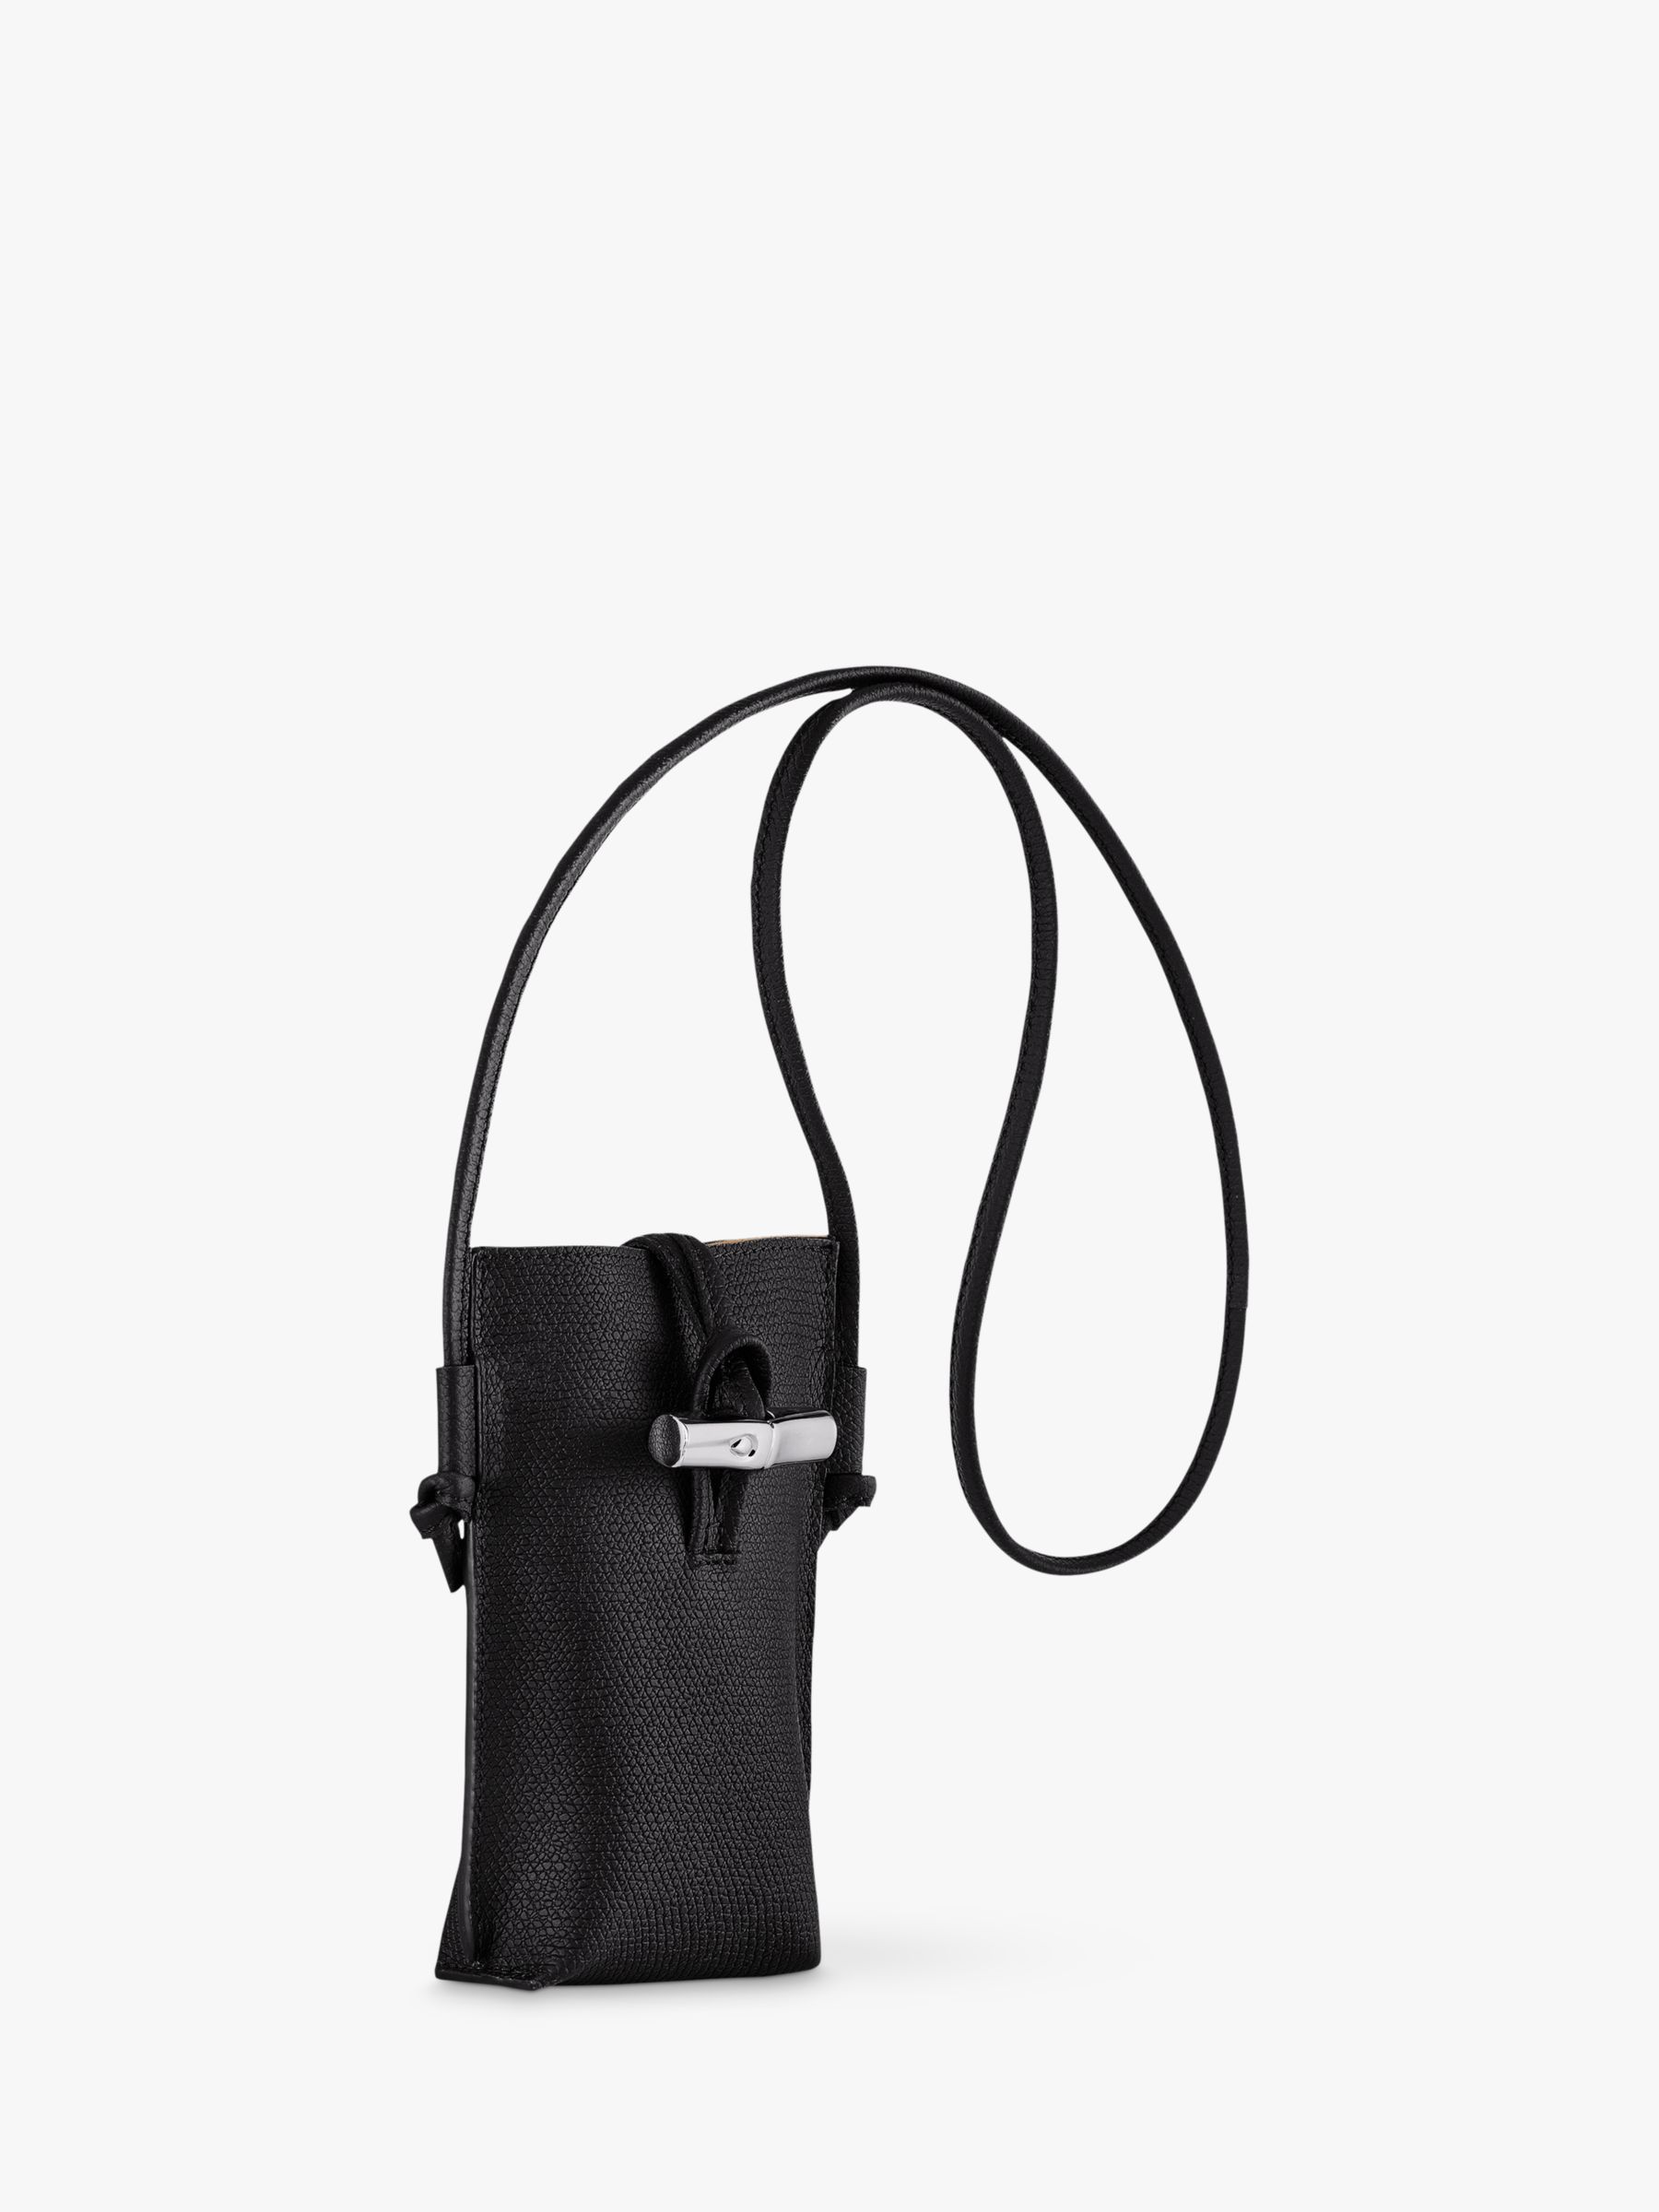 Longchamp Roseau Leather Phone Pouch Bag, Black at John Lewis & Partners